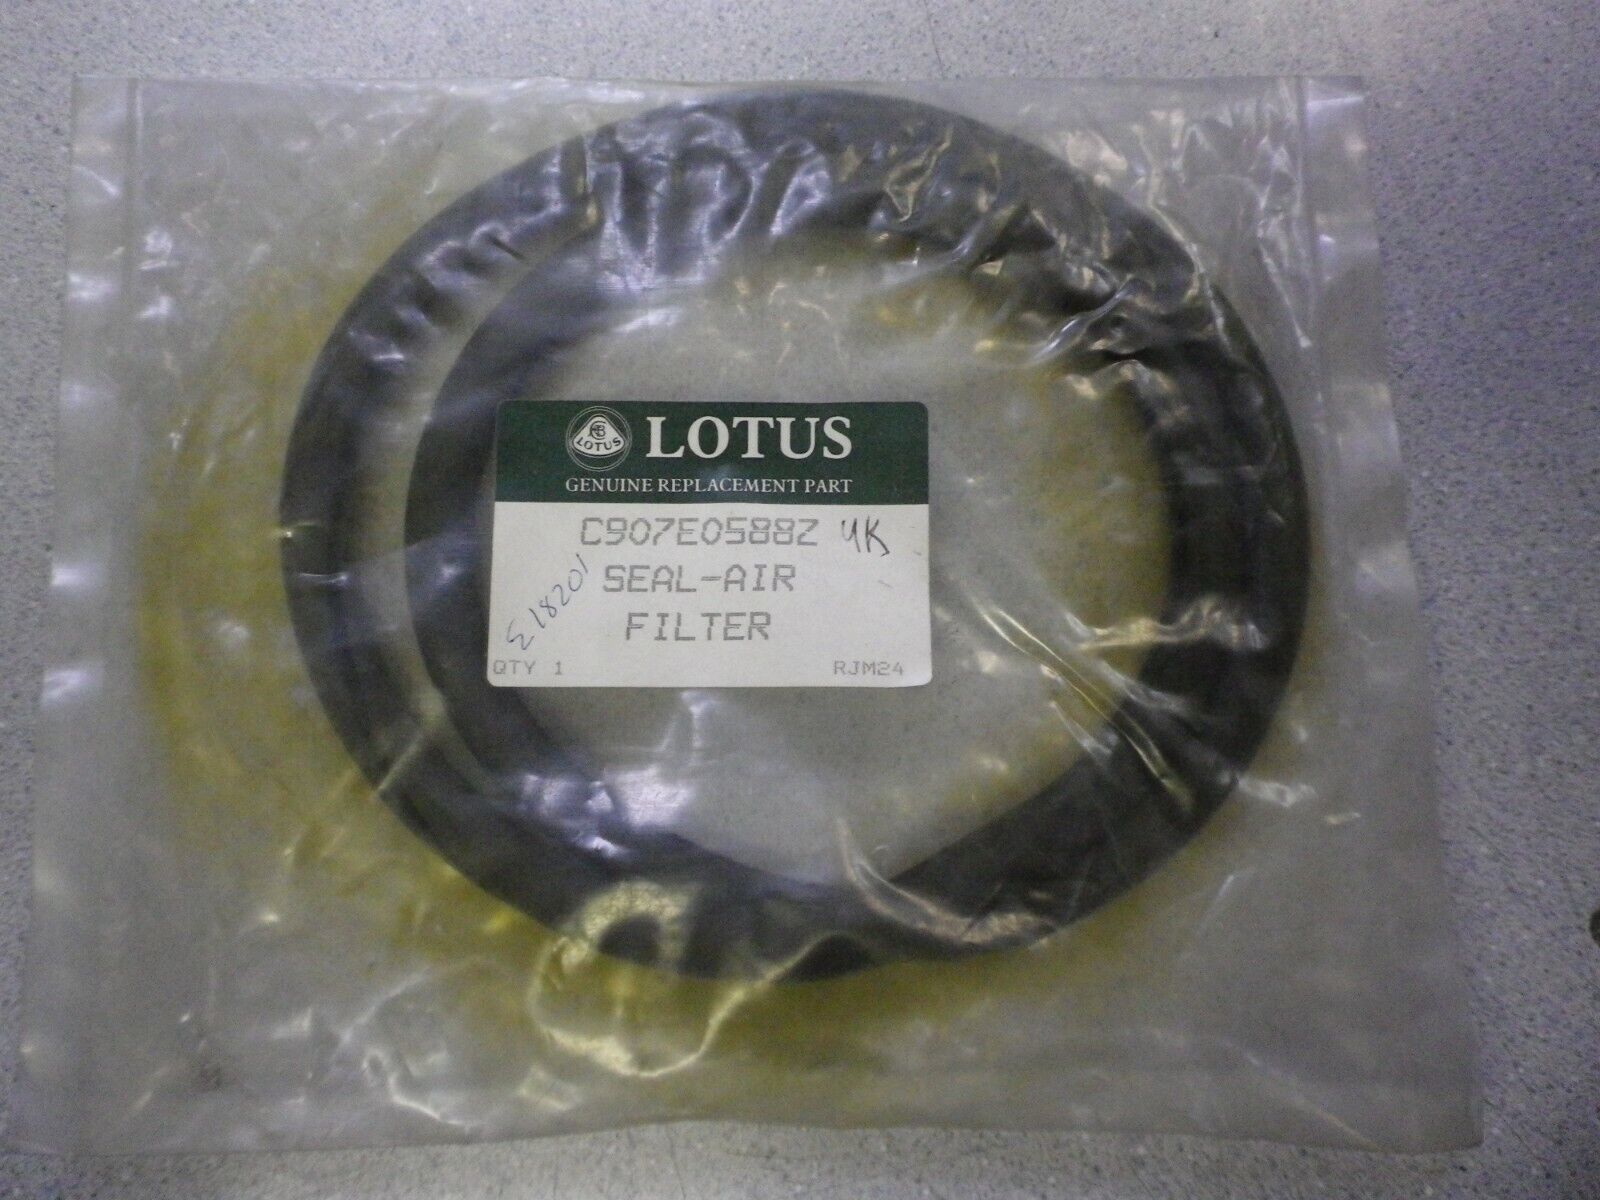 Lotus Esprit 1982-1996 S3/SE/S4/GT3 - Seal, Air Filter  (C907E0588Z) - New